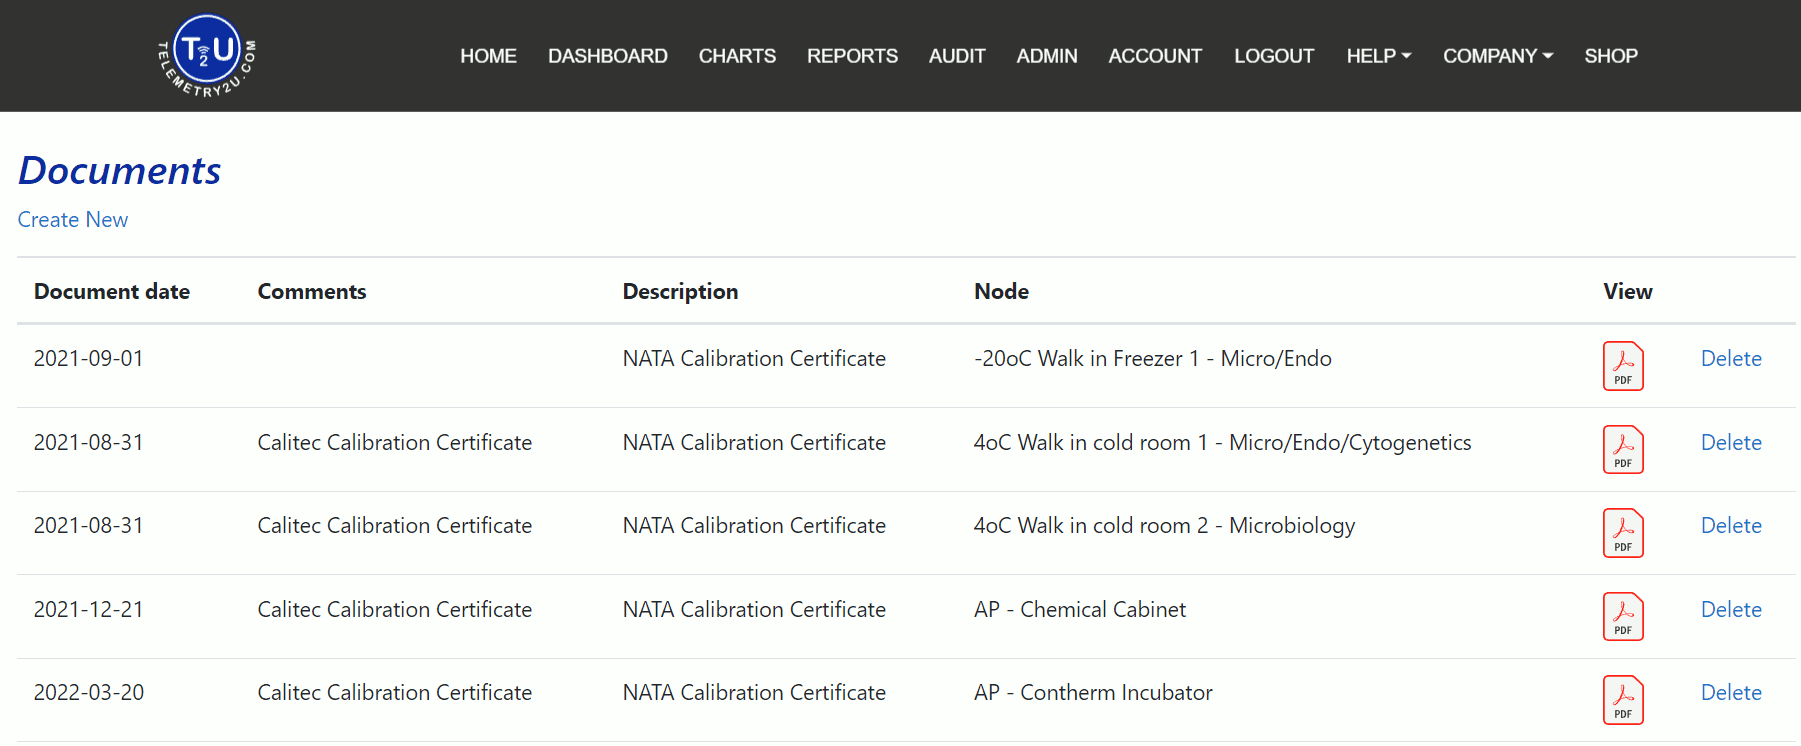 6.6.2 - Download Calibration Certificate